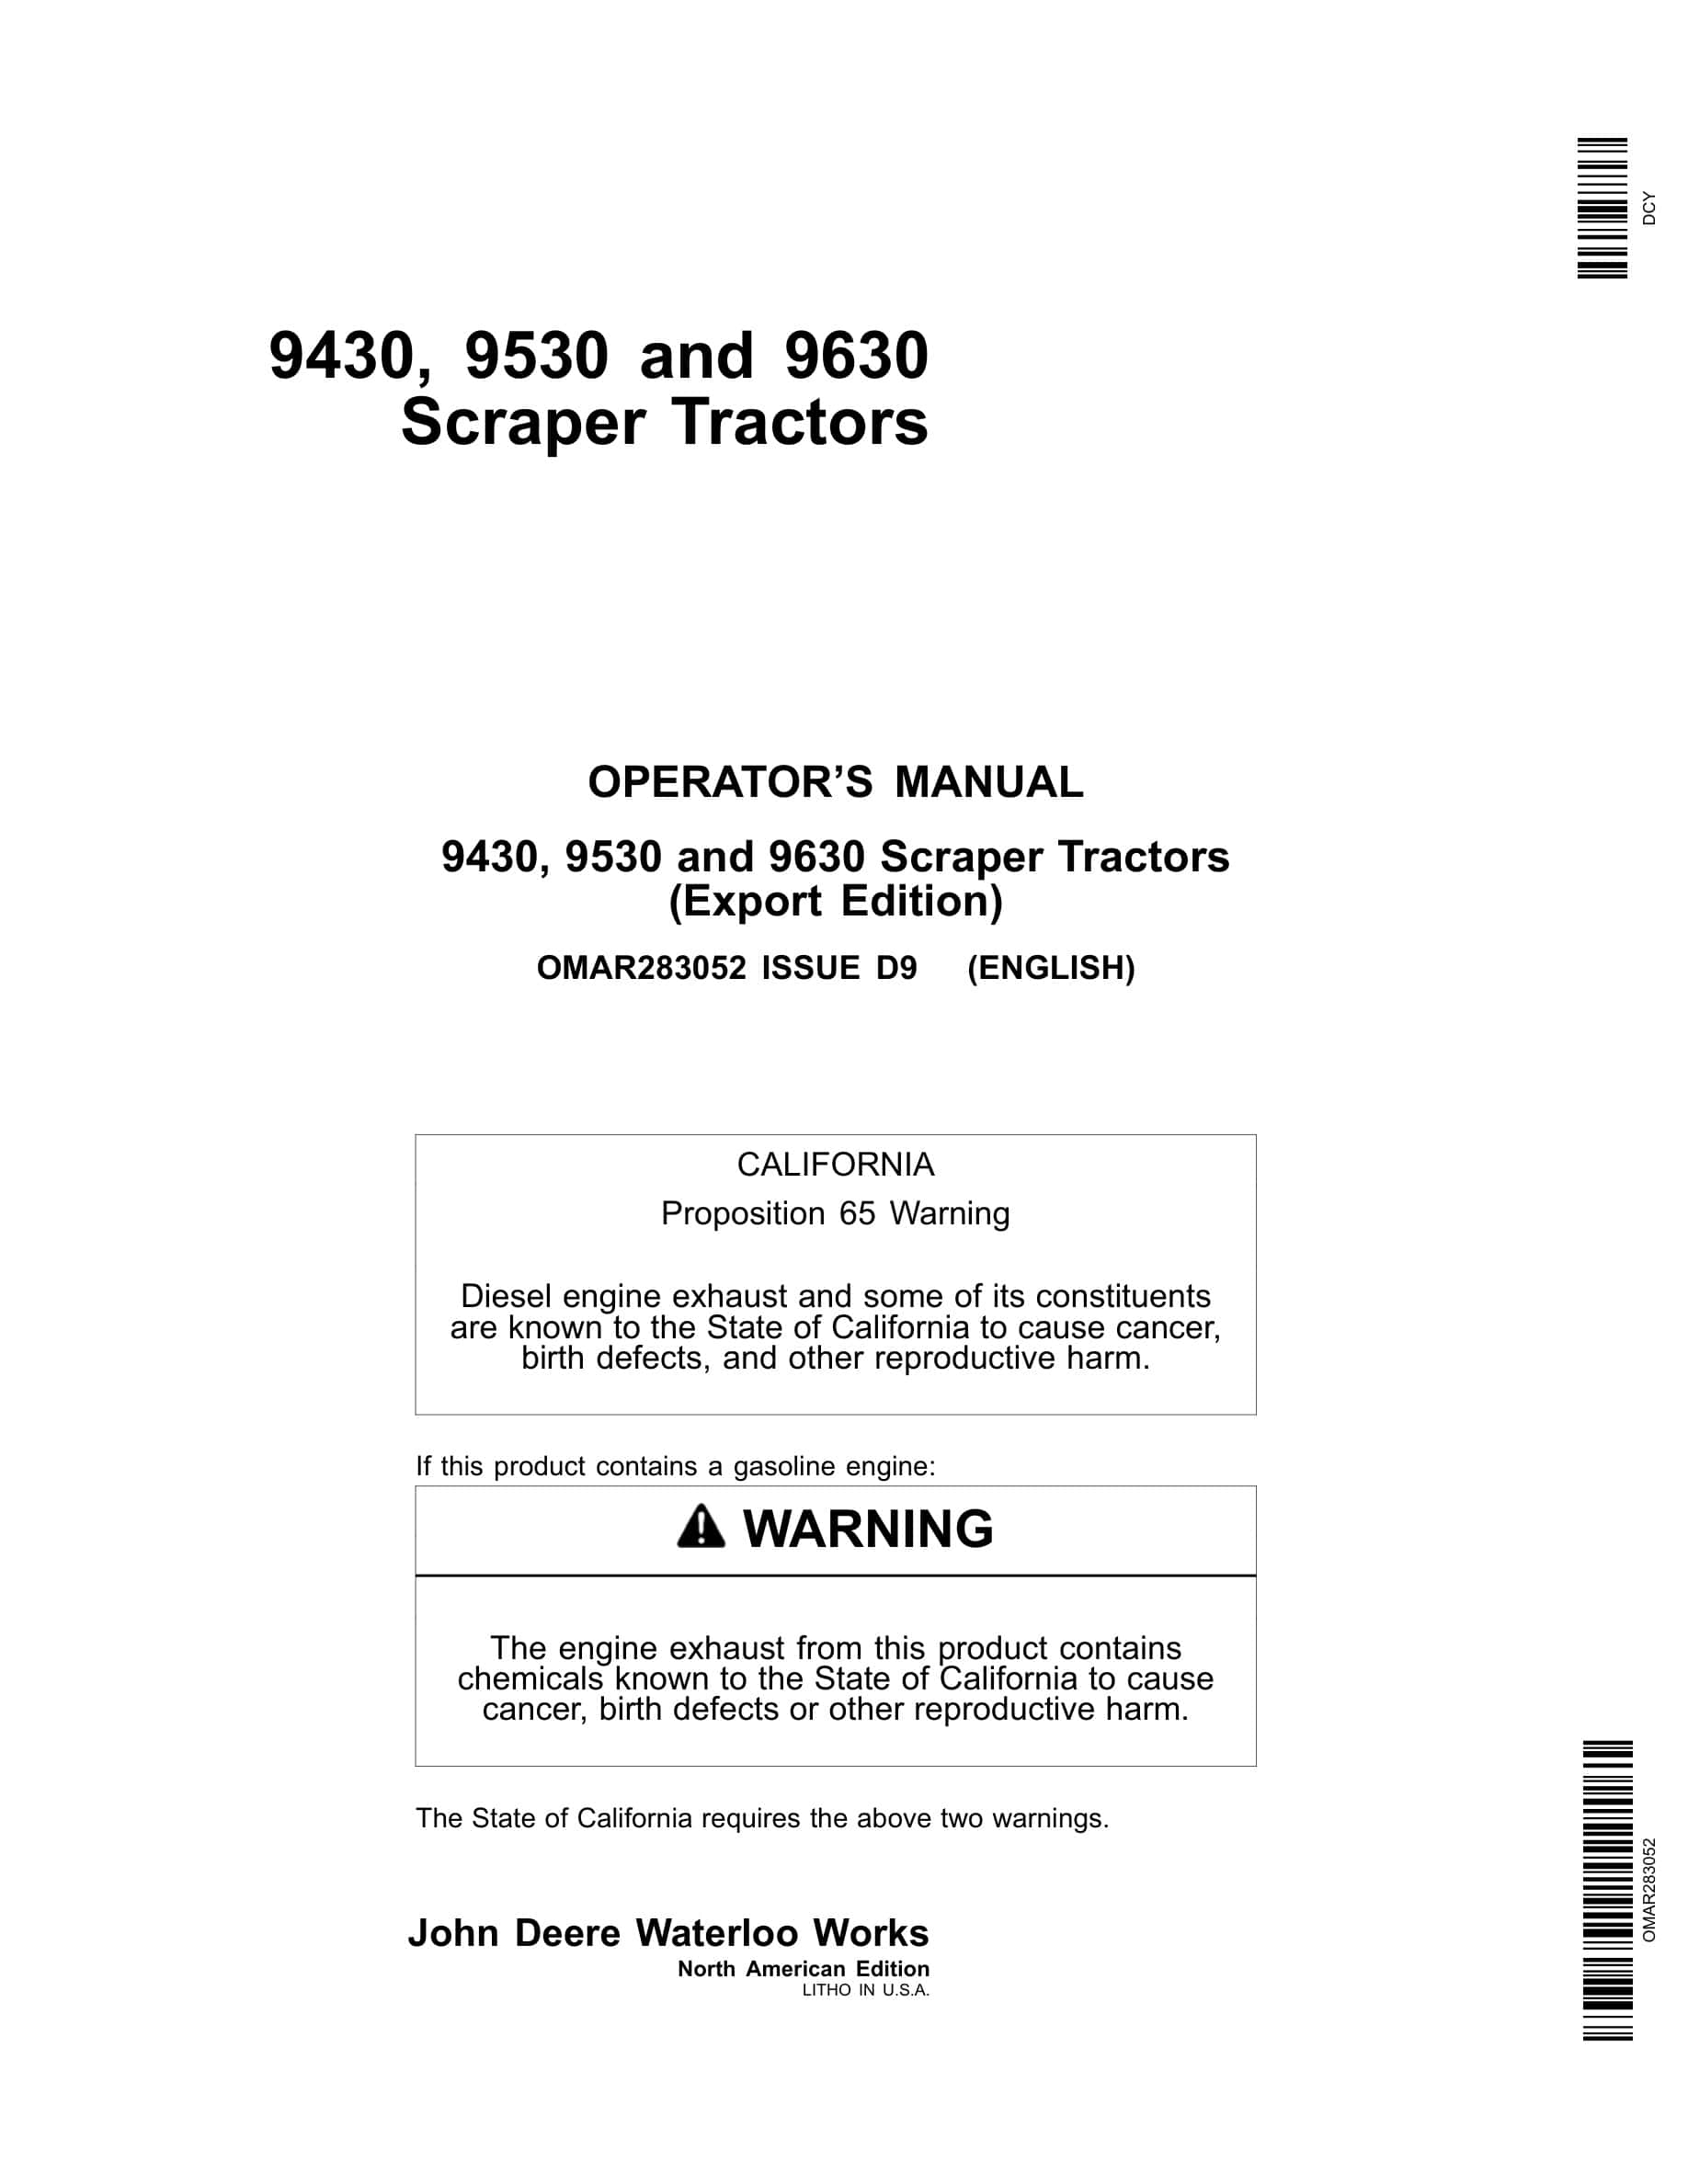 John Deere 9430 9530 9630 Scraper Tractors Operator Manuals OMAR283052-1